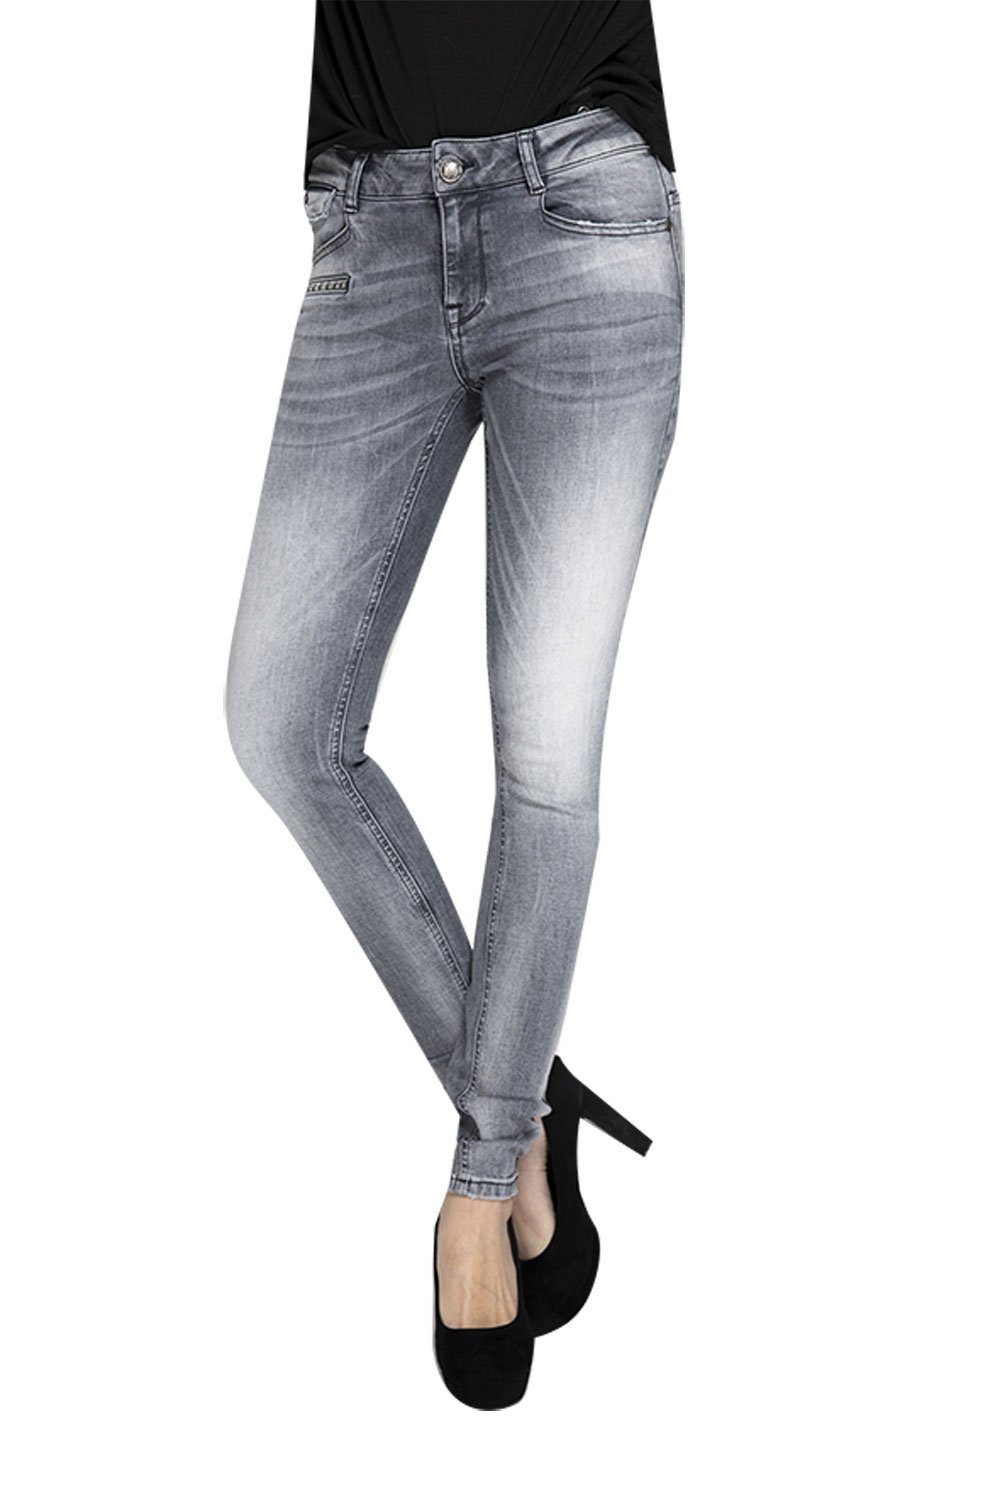 Zhrill Skinny-fit-Jeans Jeans MIA GREY Damen Jeanshose Röhrenjeans 5 Pocket  Vintage Skinny Fit Mia Grey